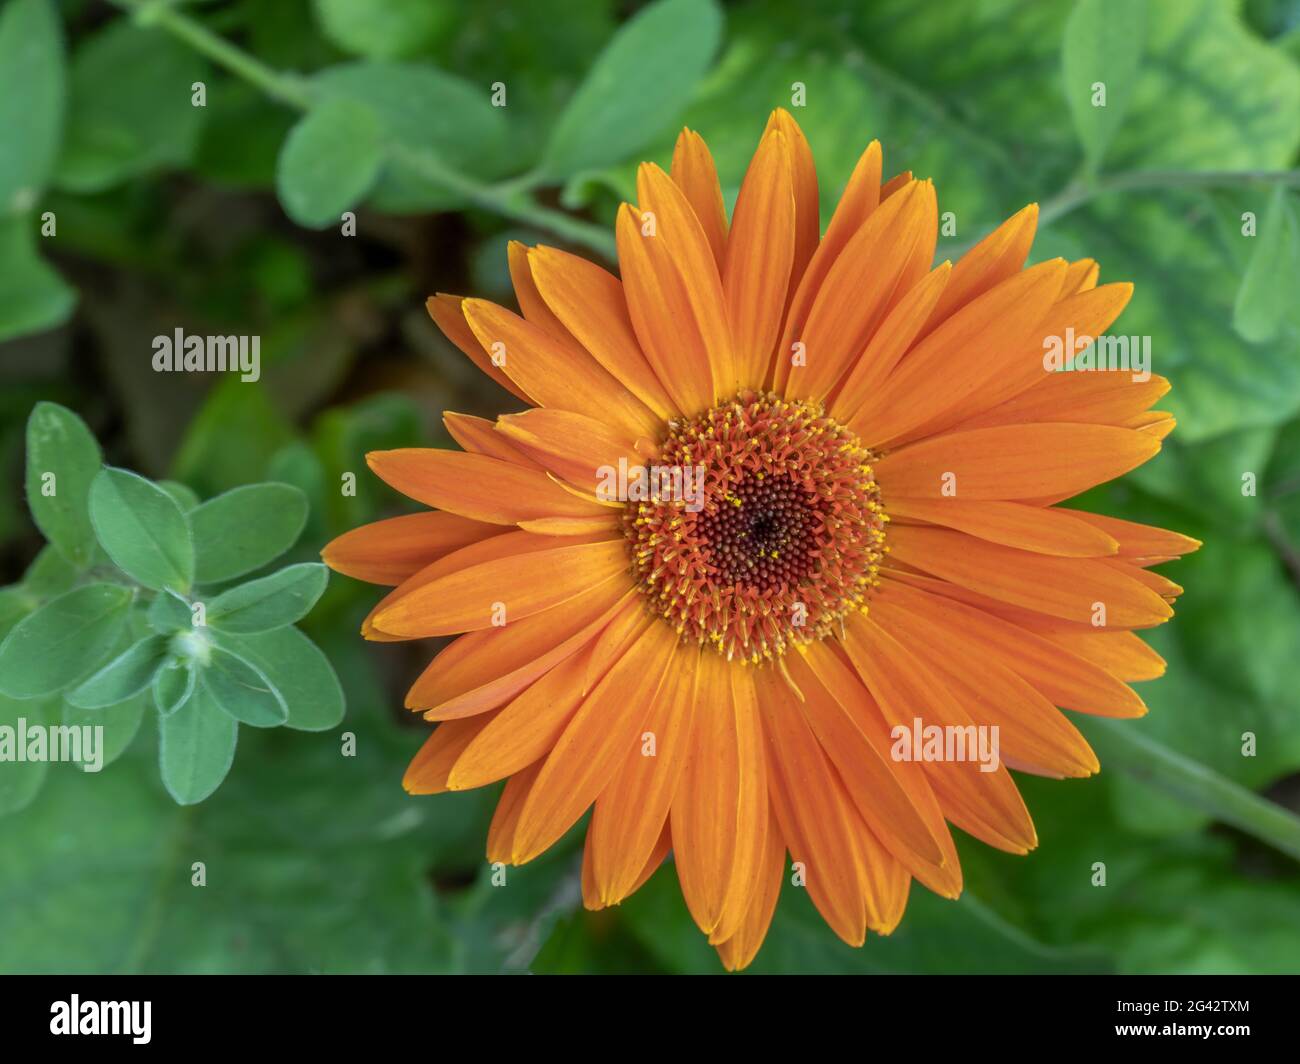 Close up of Orange Mum or Chrysanthemum against lush green leaves Stock Photo